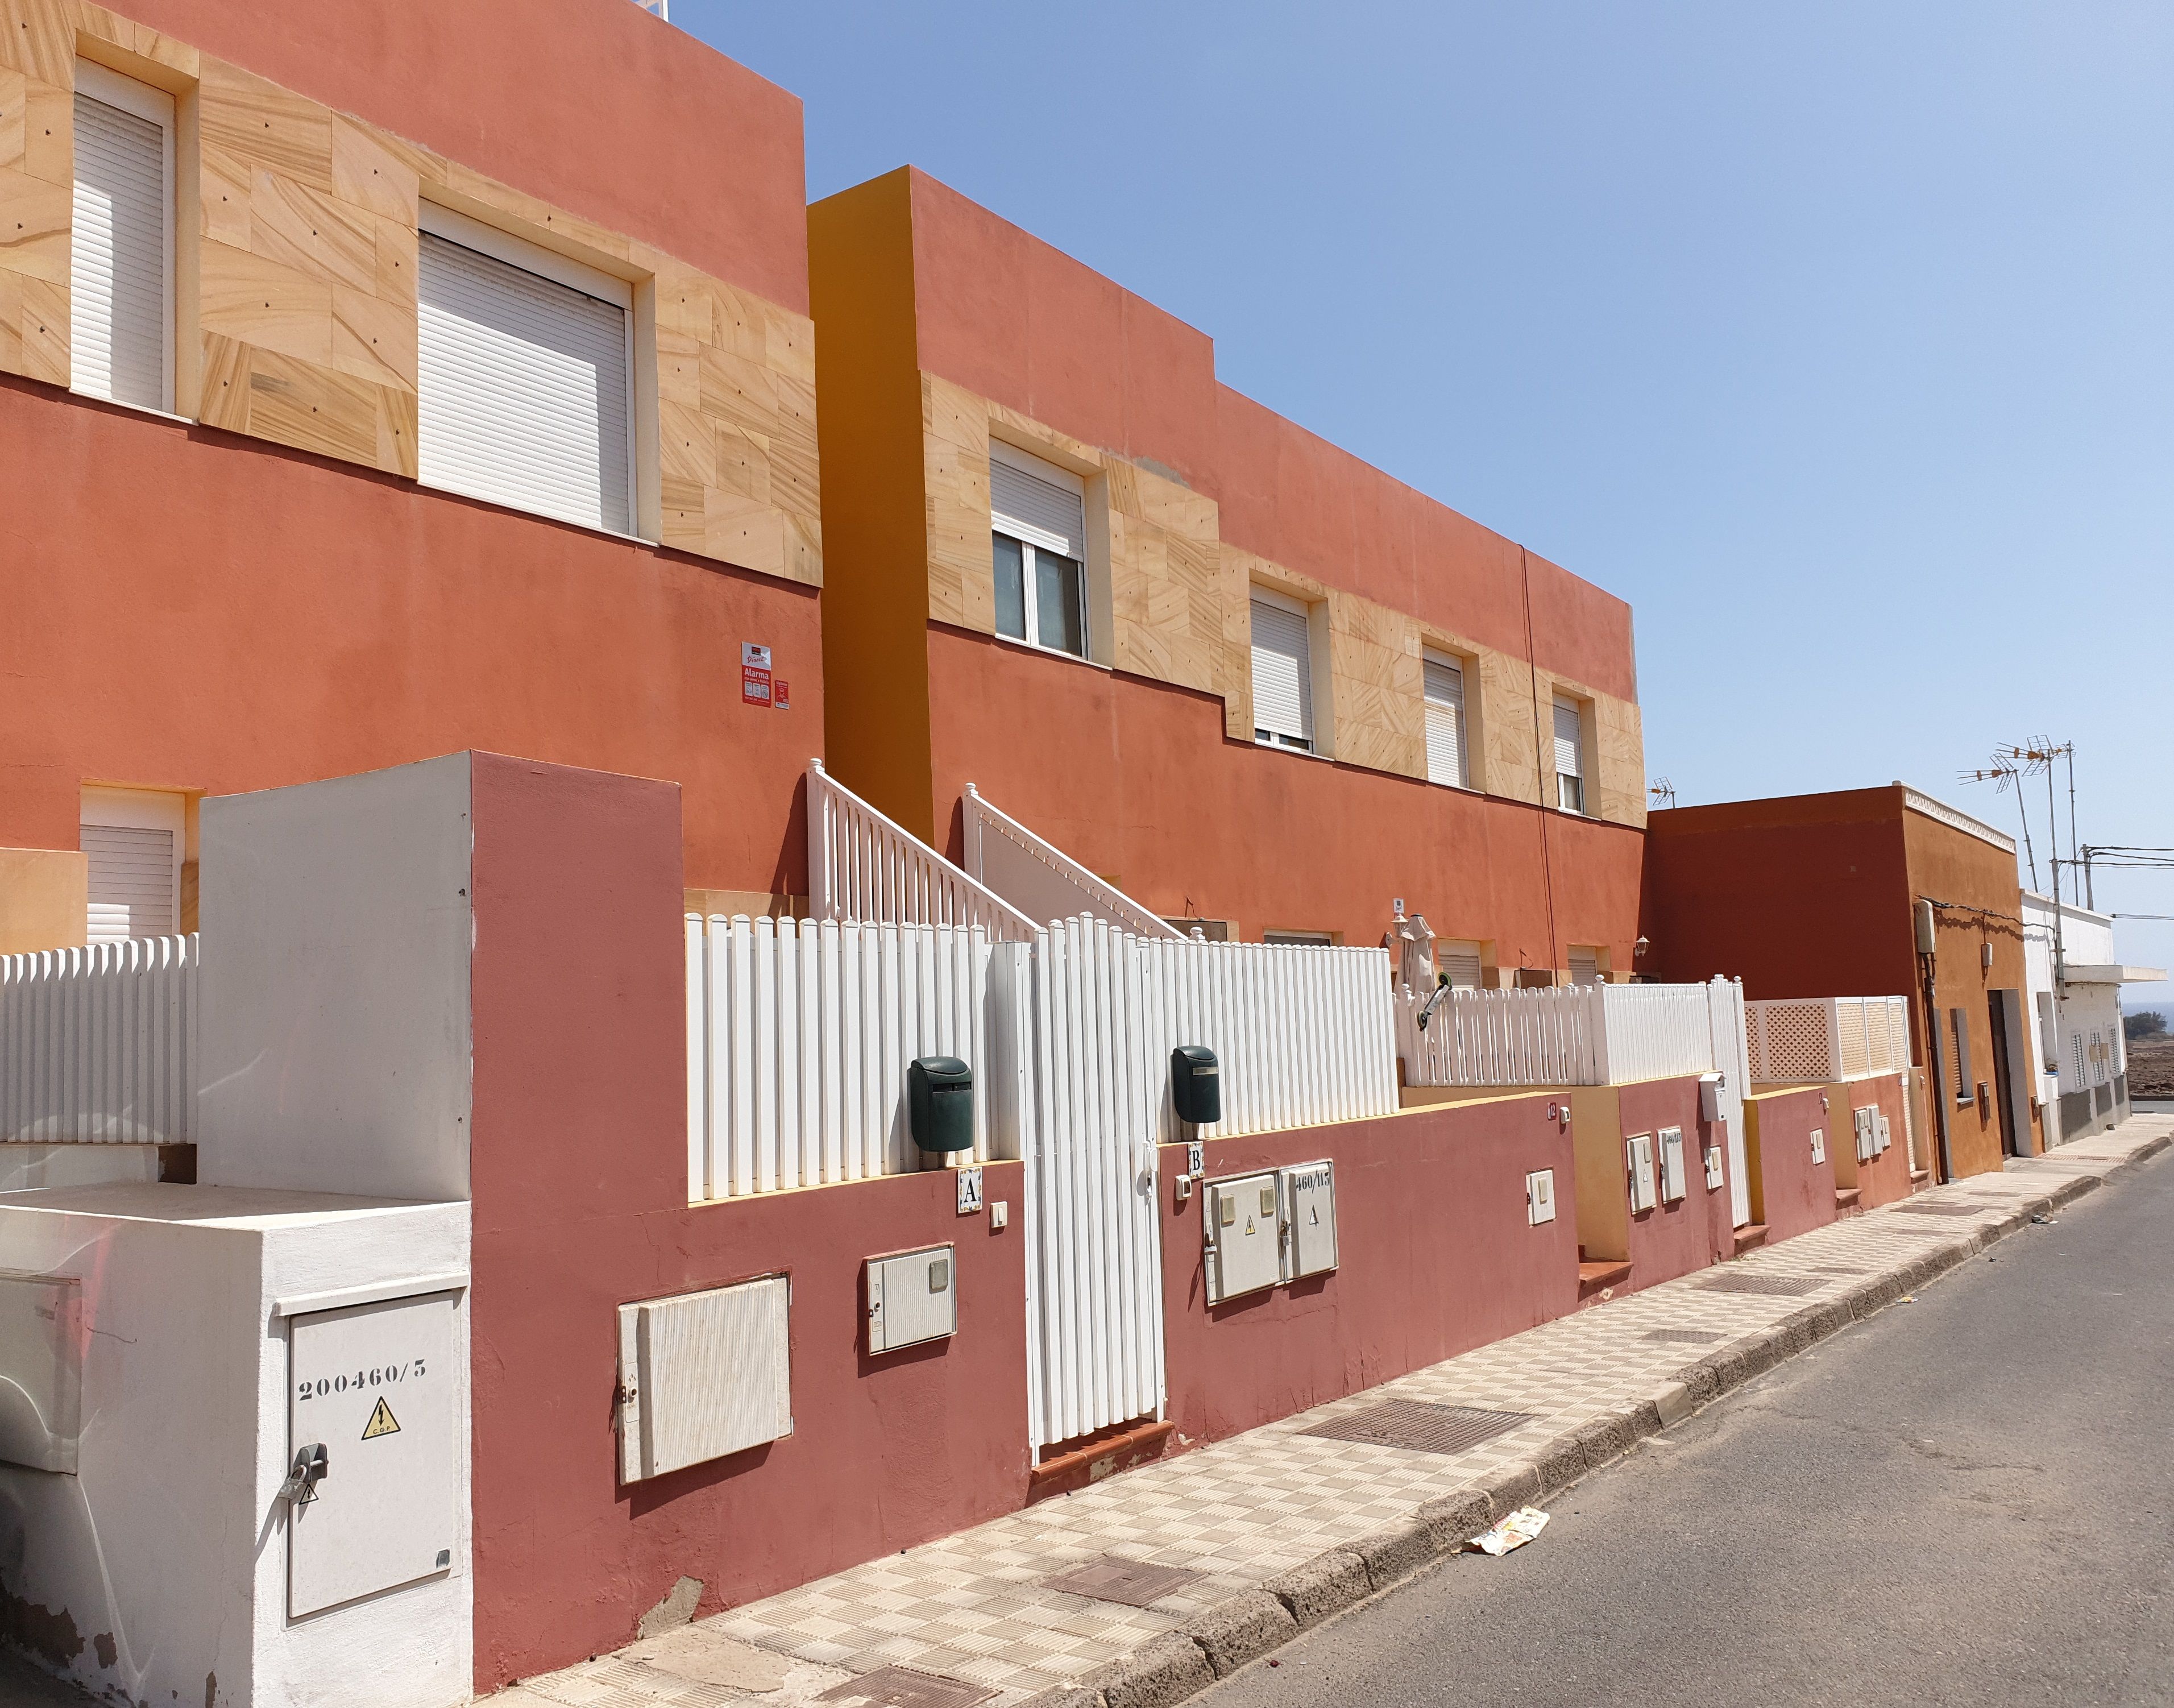 Huge offer of Flats for sale at El Matorral, Puerto del Rosario | fotocasa